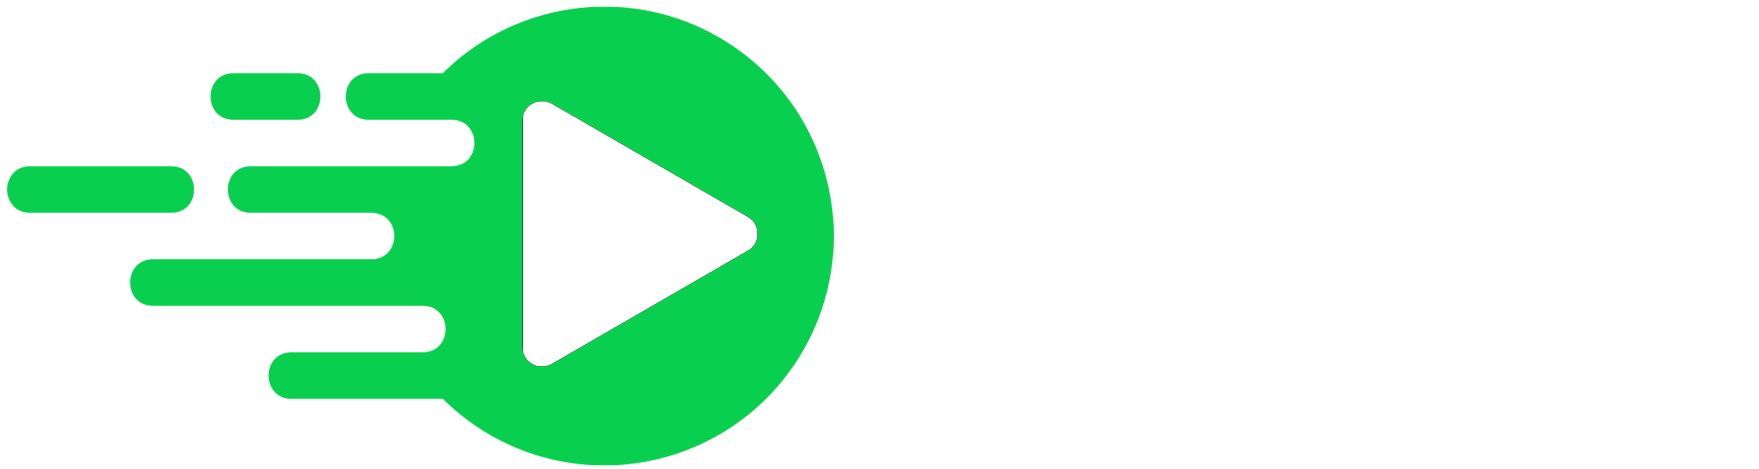 Spotify Playback Speed